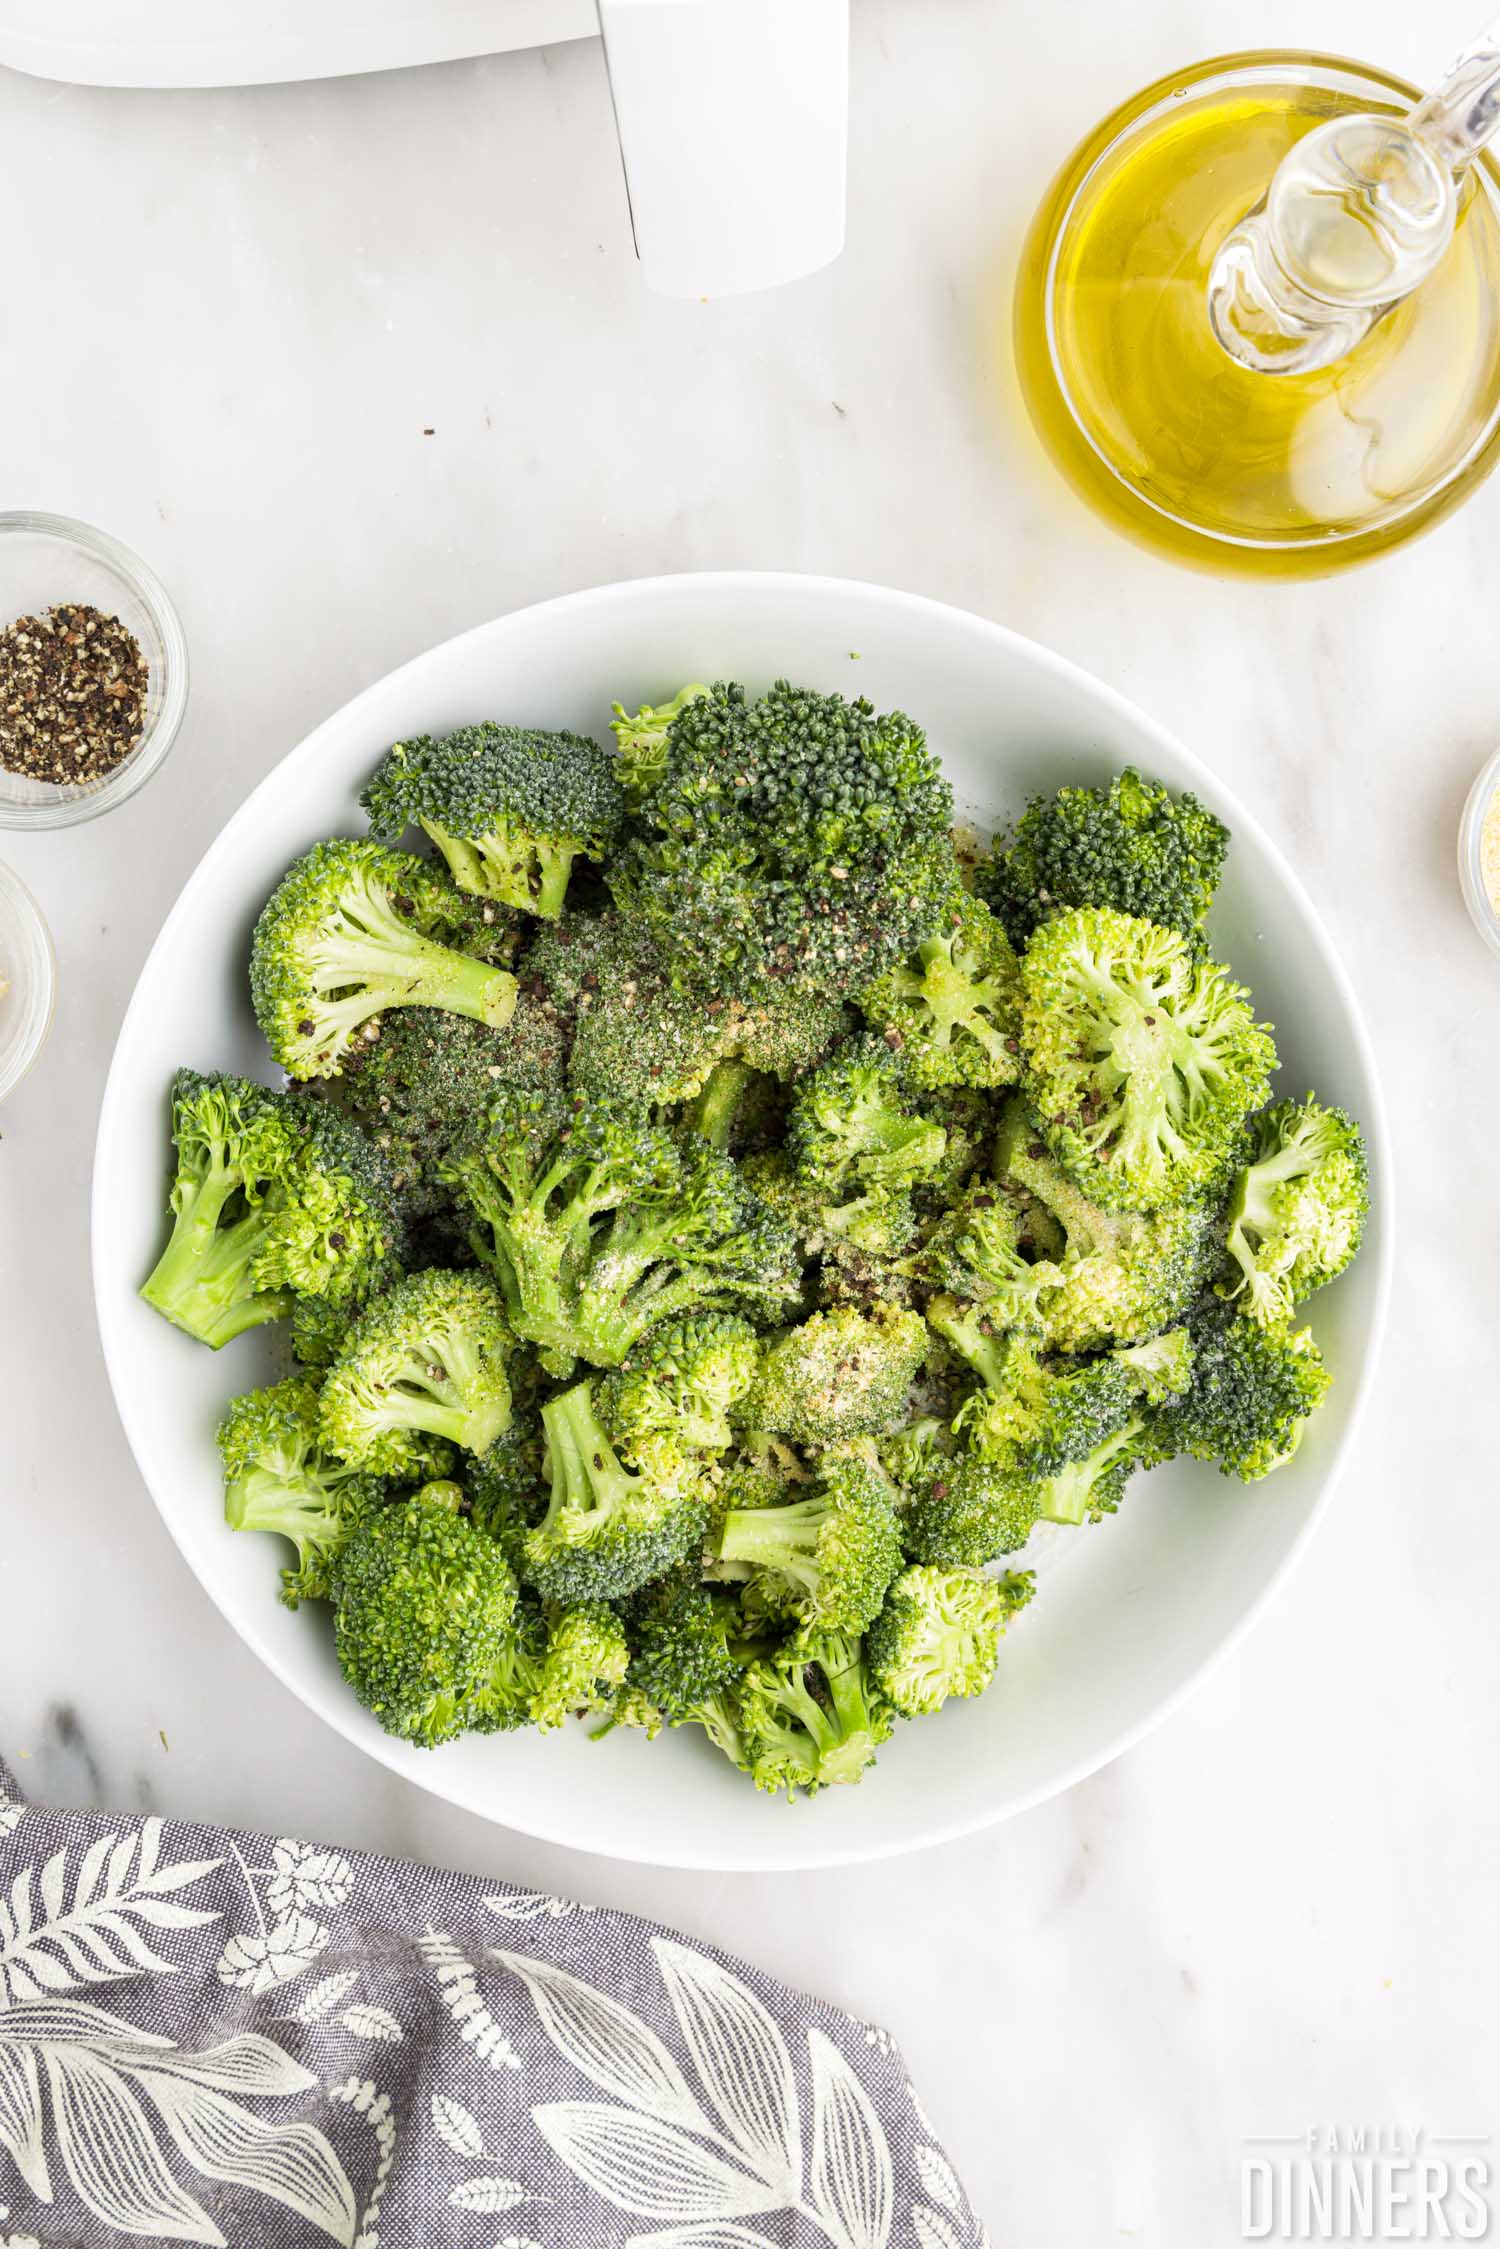 seasoning sprinkled over raw broccoli.